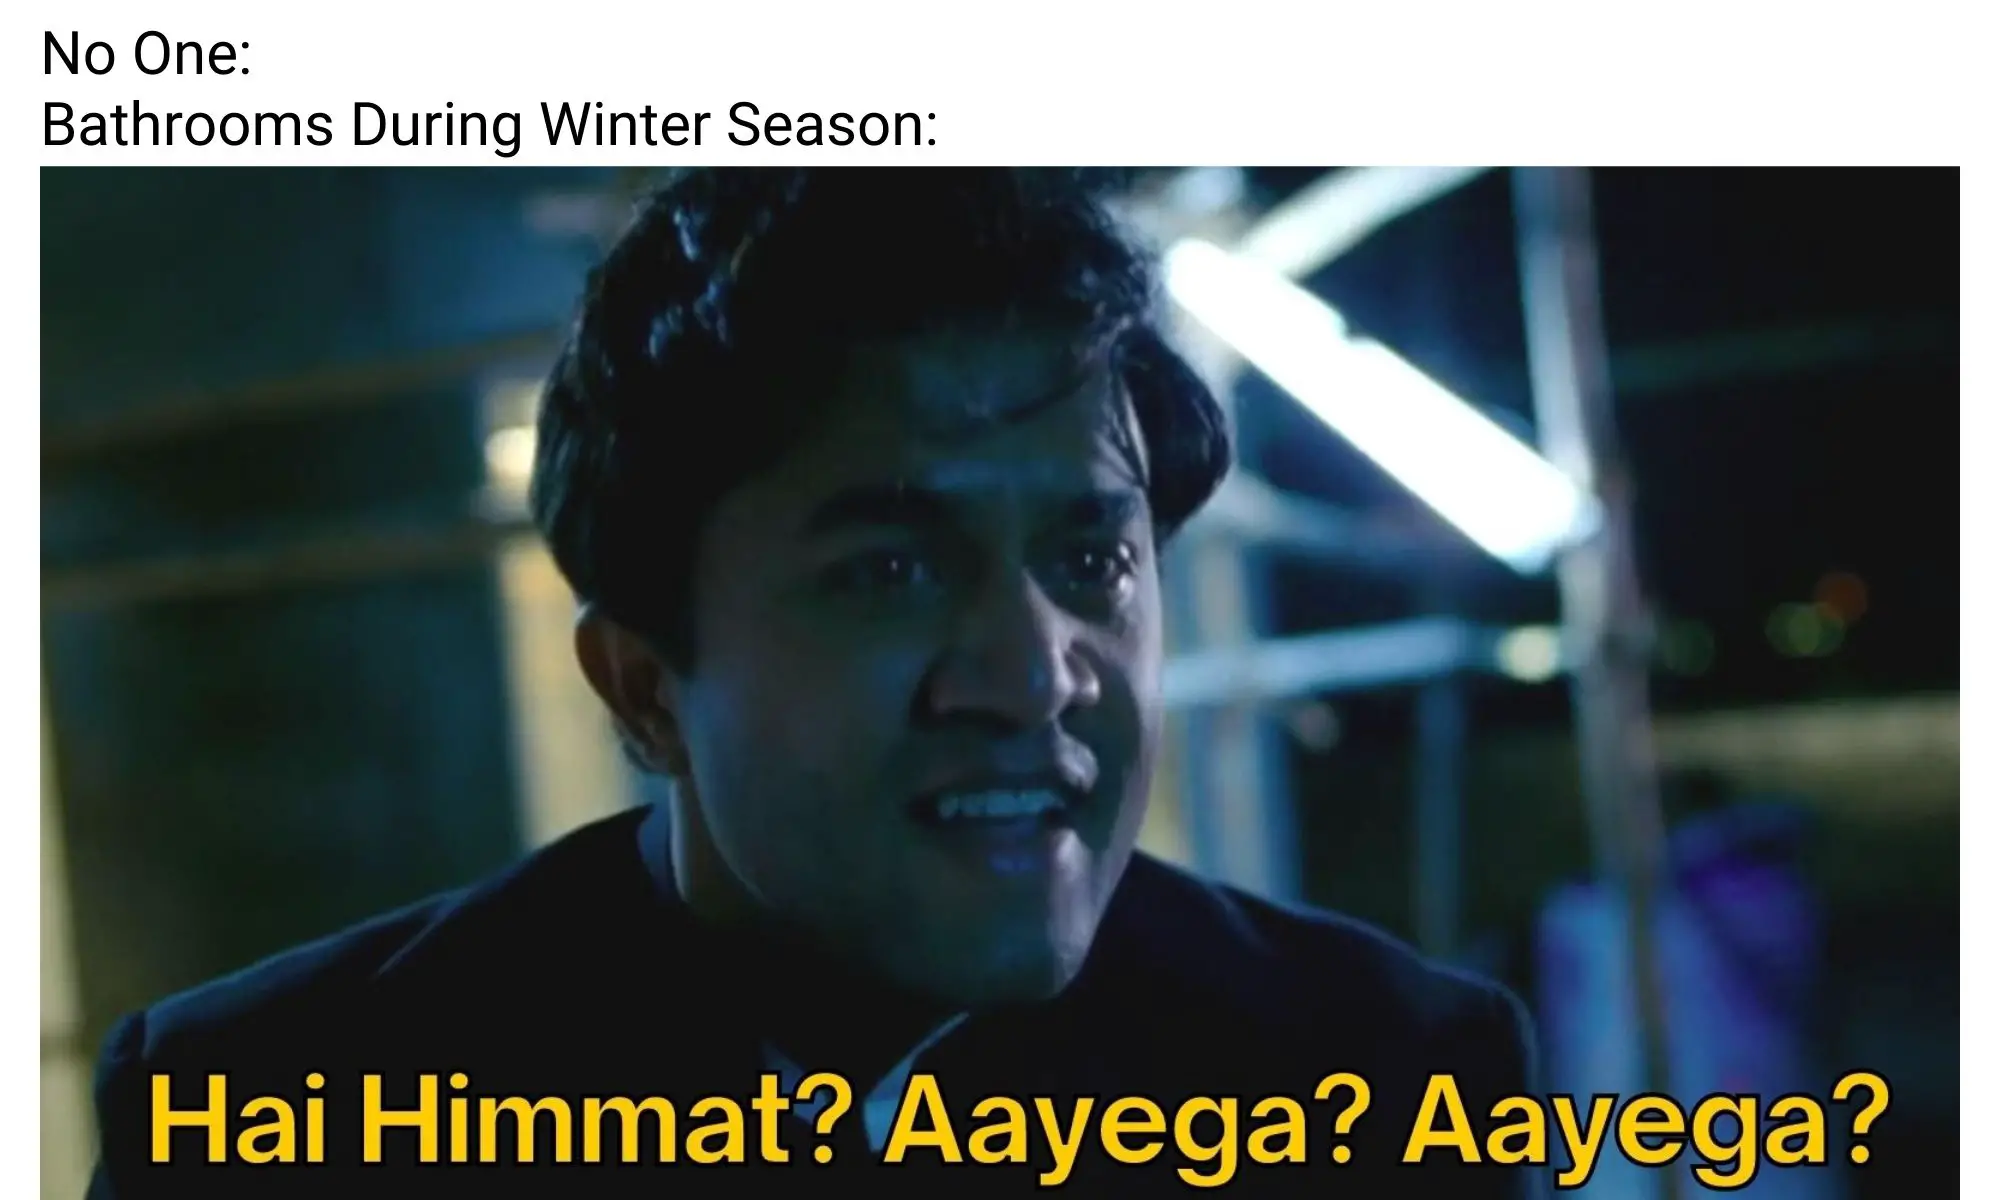 Hai Himmat meme on winter season